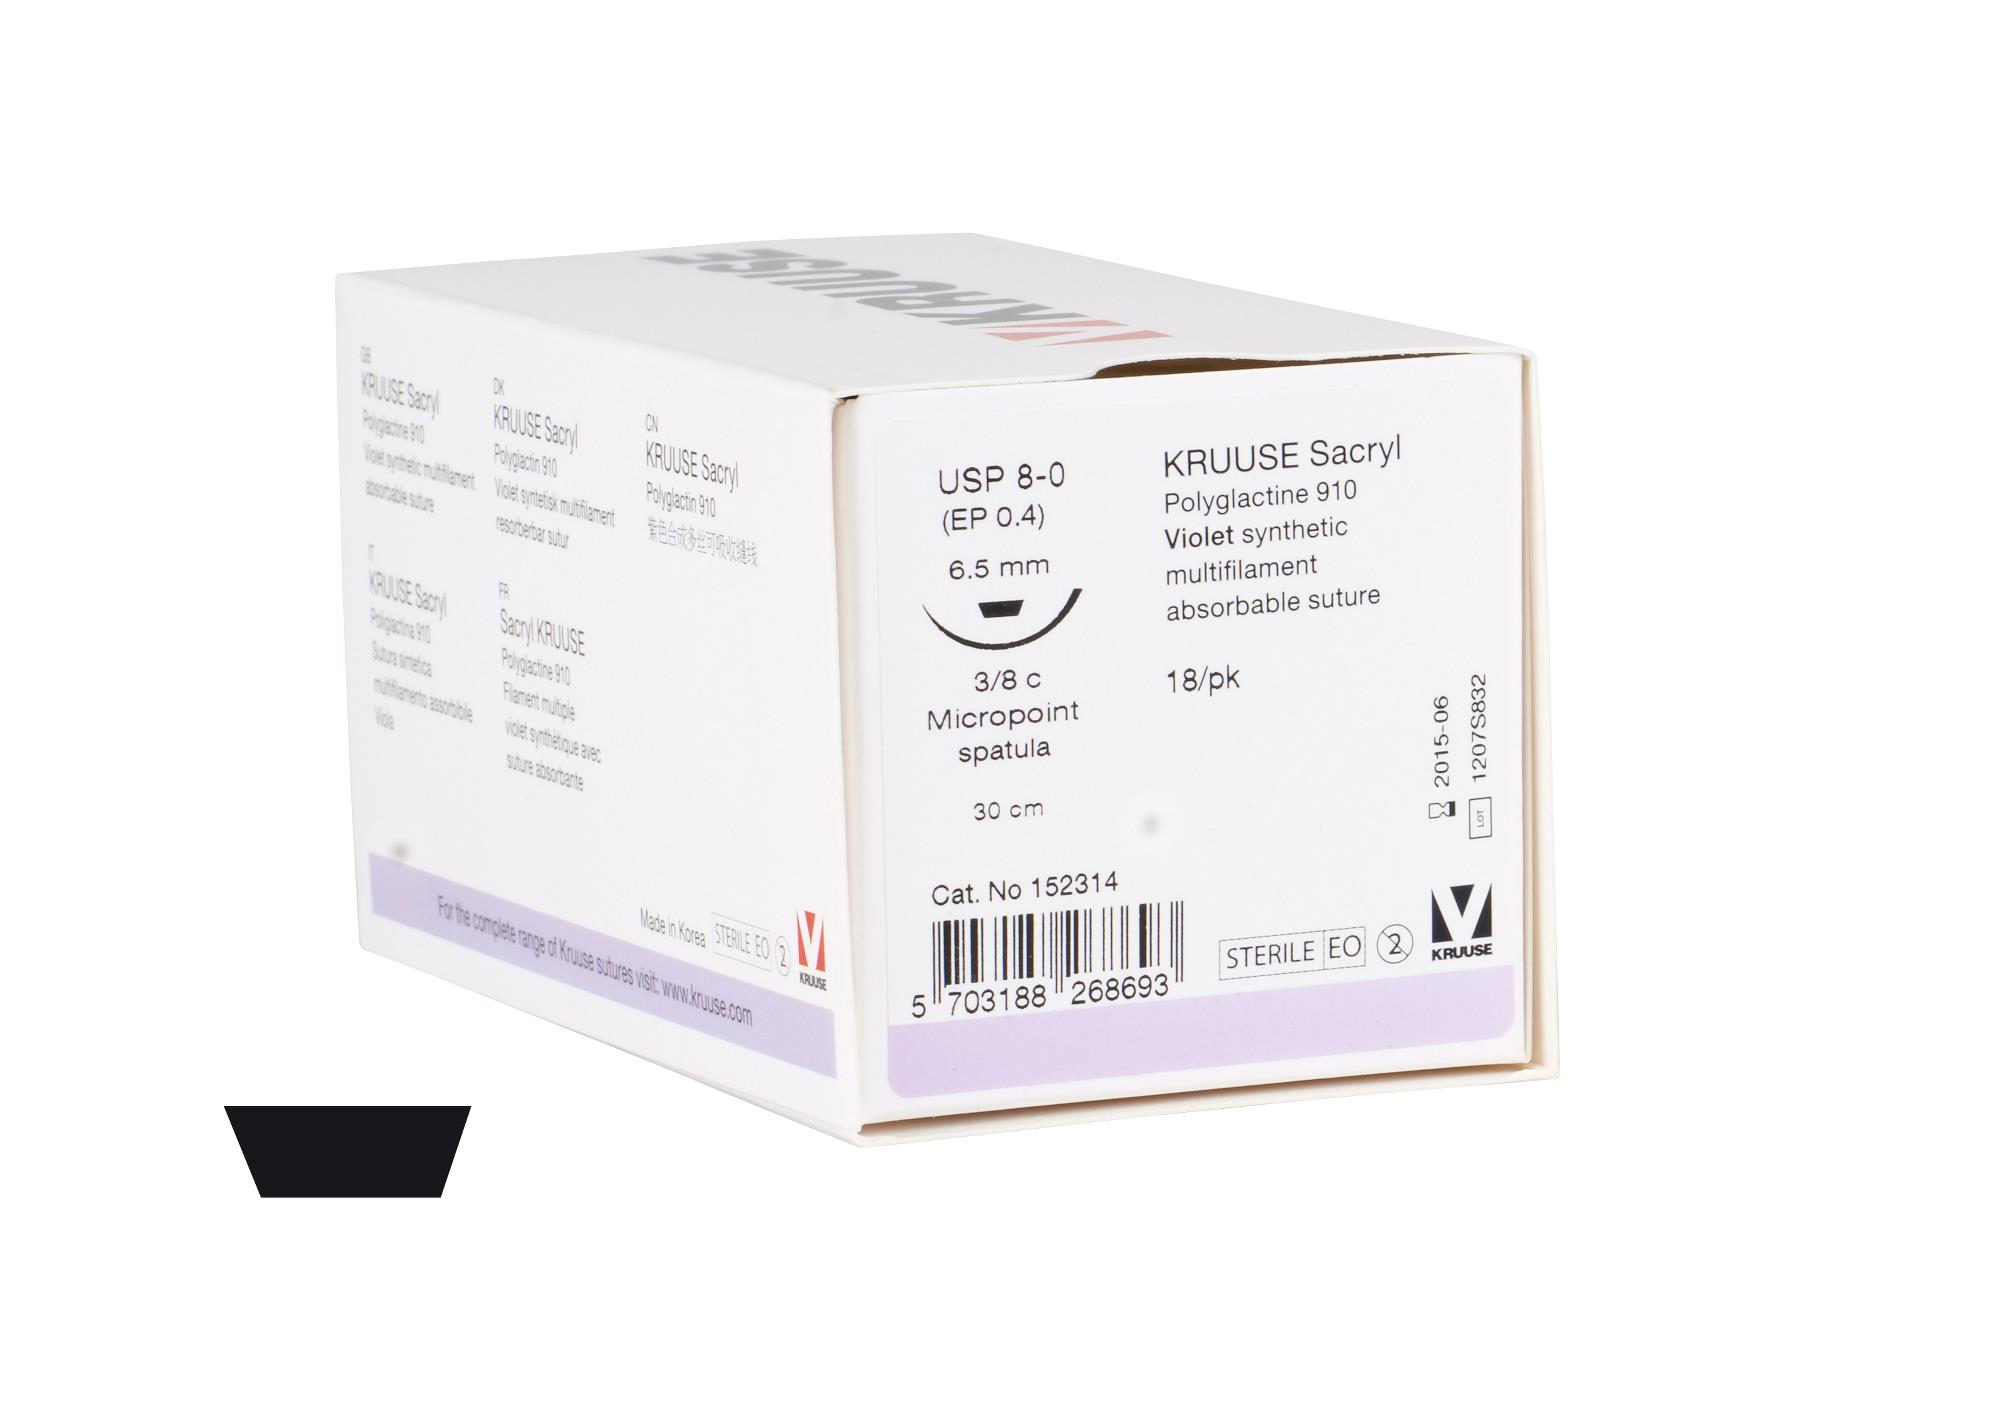 KRUUSE Sacryl Suture, USP 8-0, 30 cm, needle: 6,5 mm, micropoint spatula, 3/8 circle, 18/pk